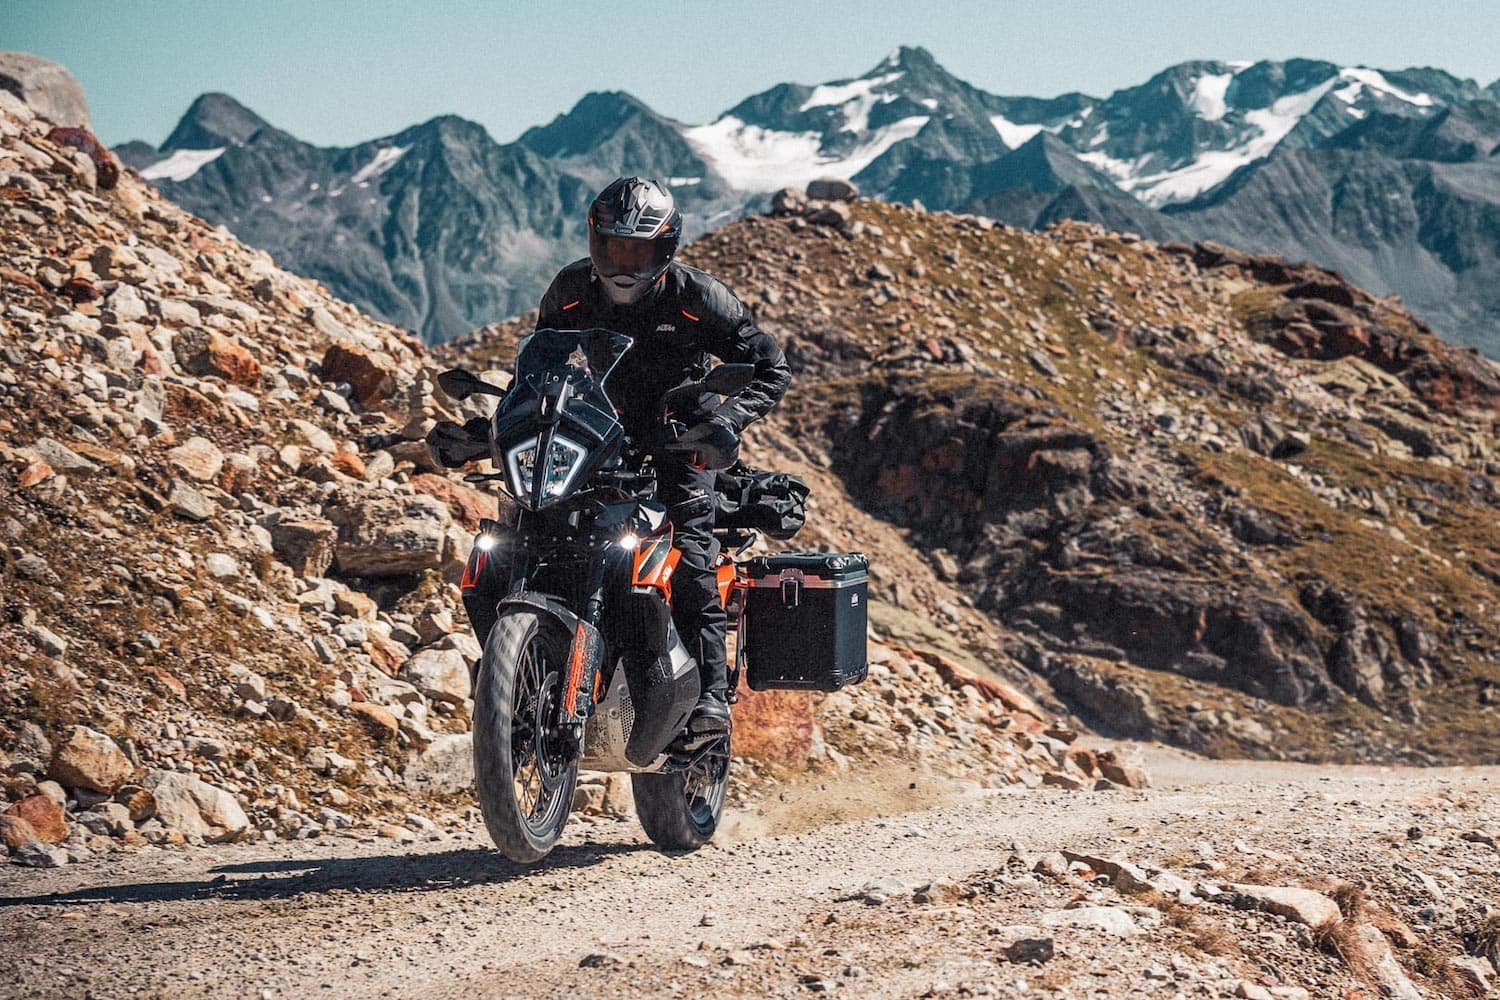 2021 KTM 890 Adventure - action shot outdoors dirt road mountains